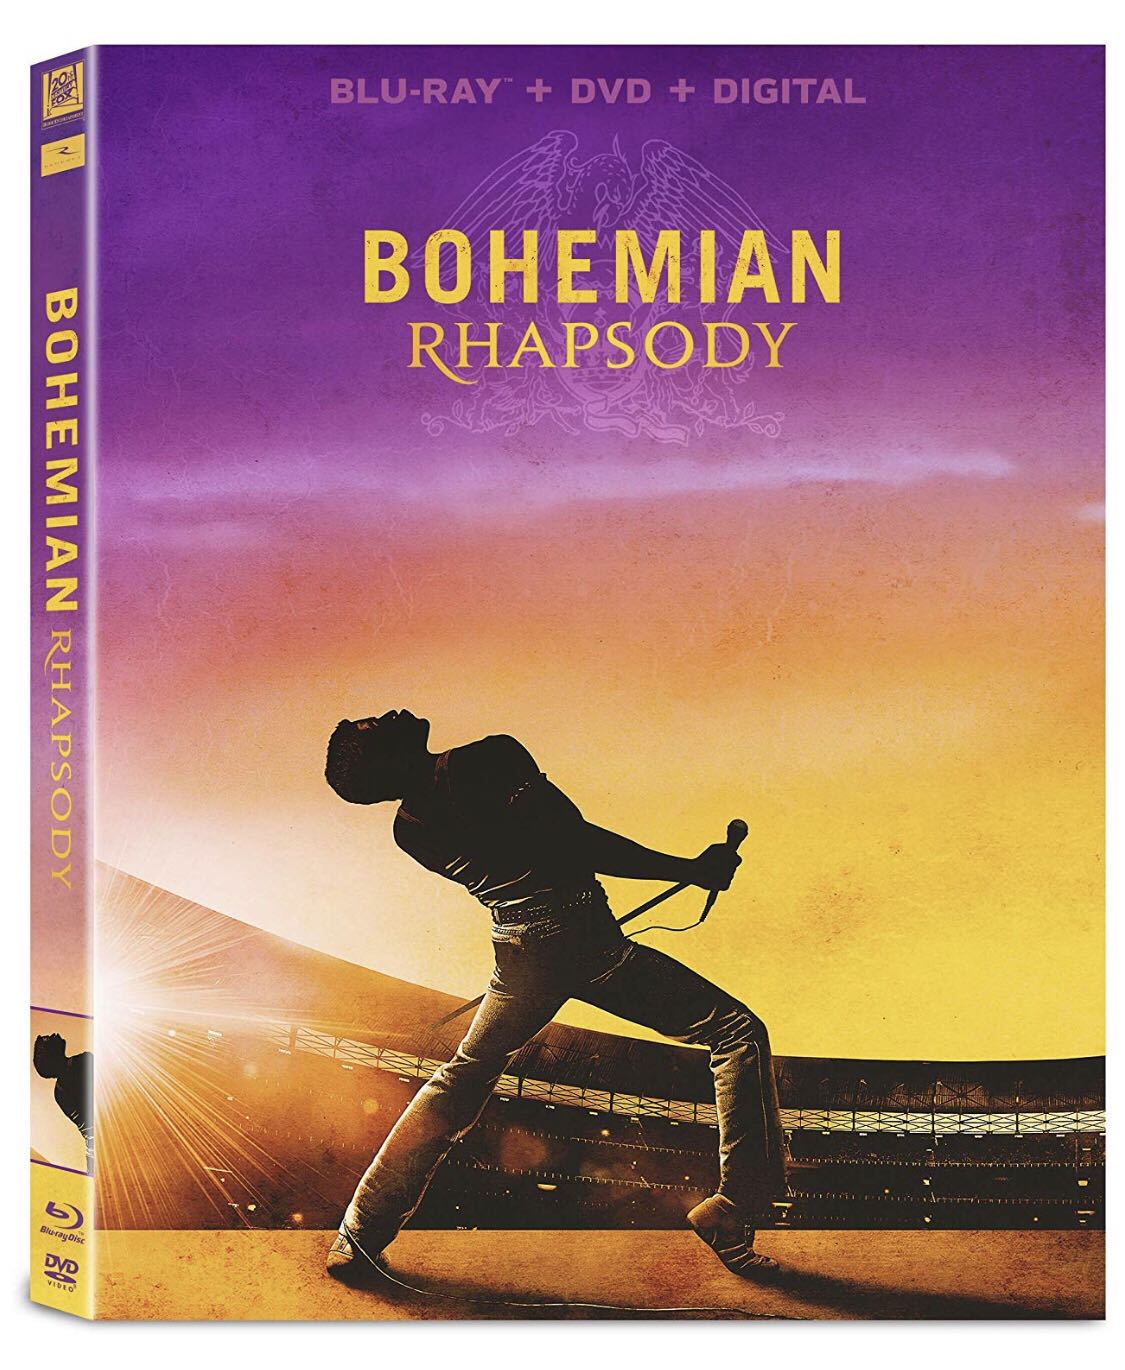 Bohemian Rhapsody  movie collectible [Barcode 024543558231] - Main Image 1